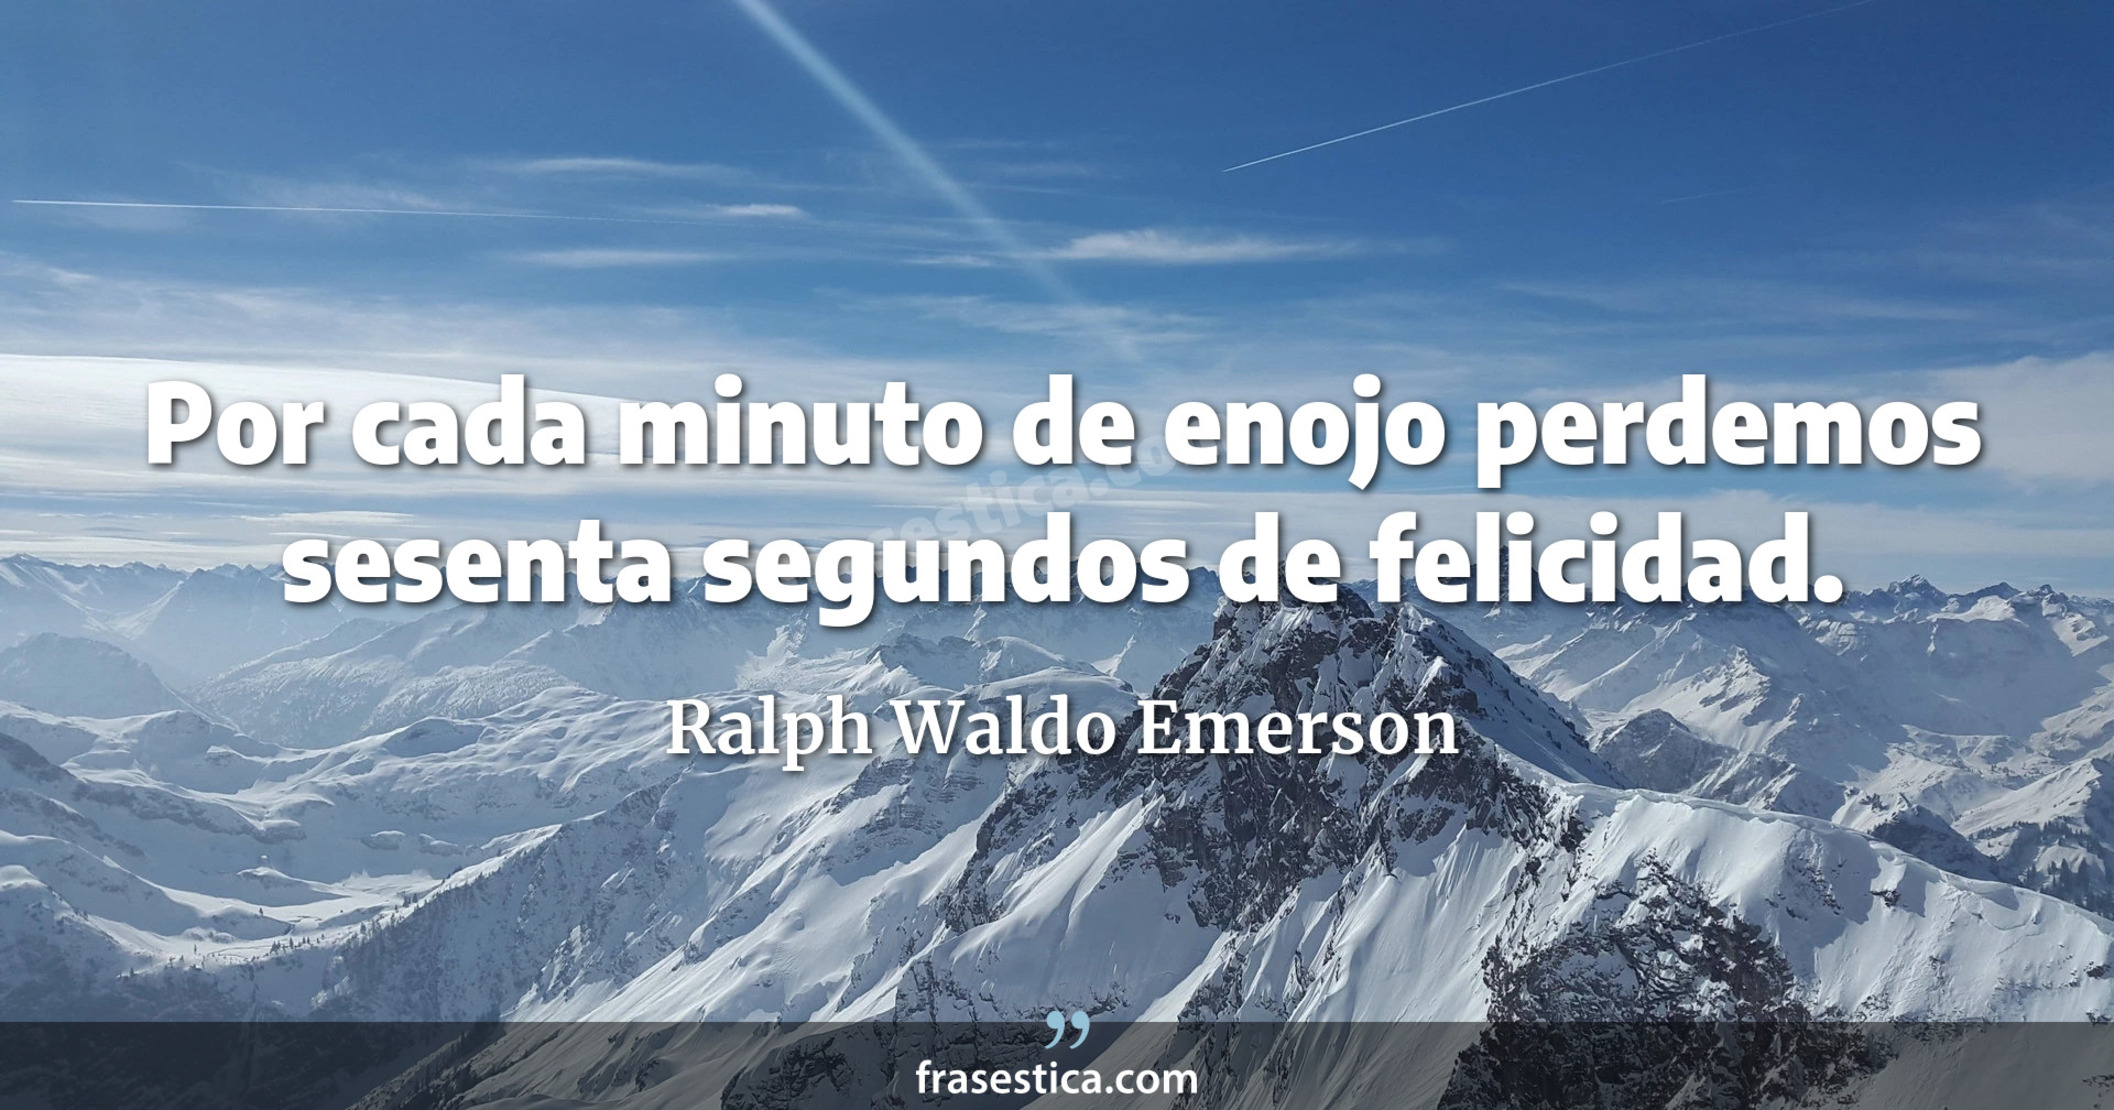 Por cada minuto de enojo perdemos sesenta segundos de felicidad. - Ralph Waldo Emerson